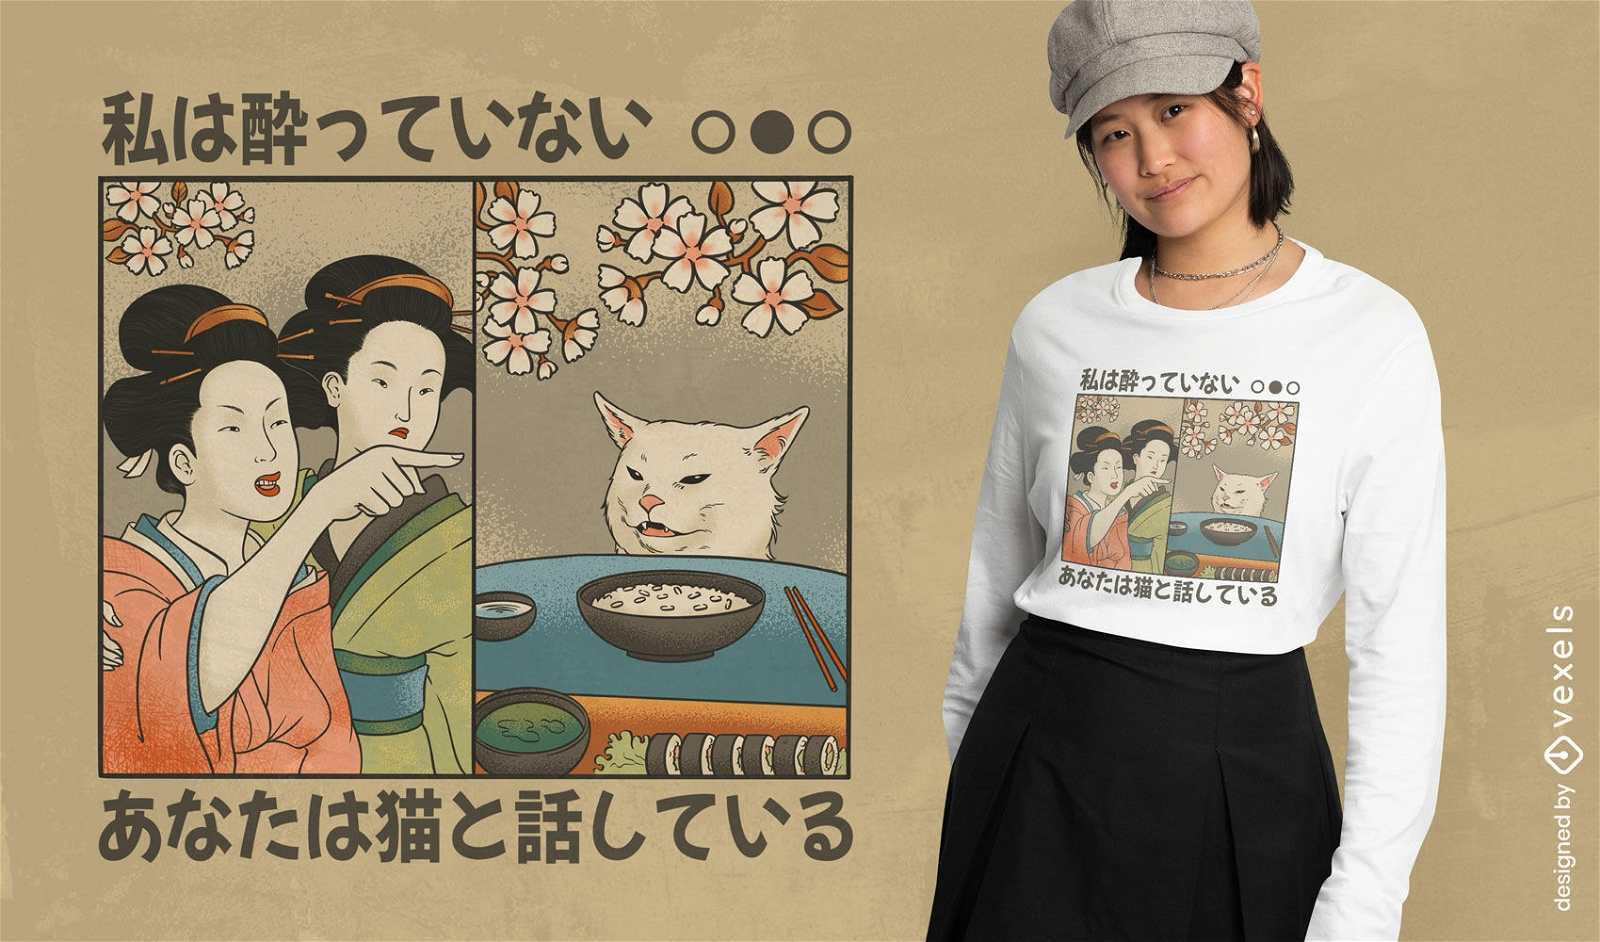 Japanese woman yells at cat meme t-shirt design